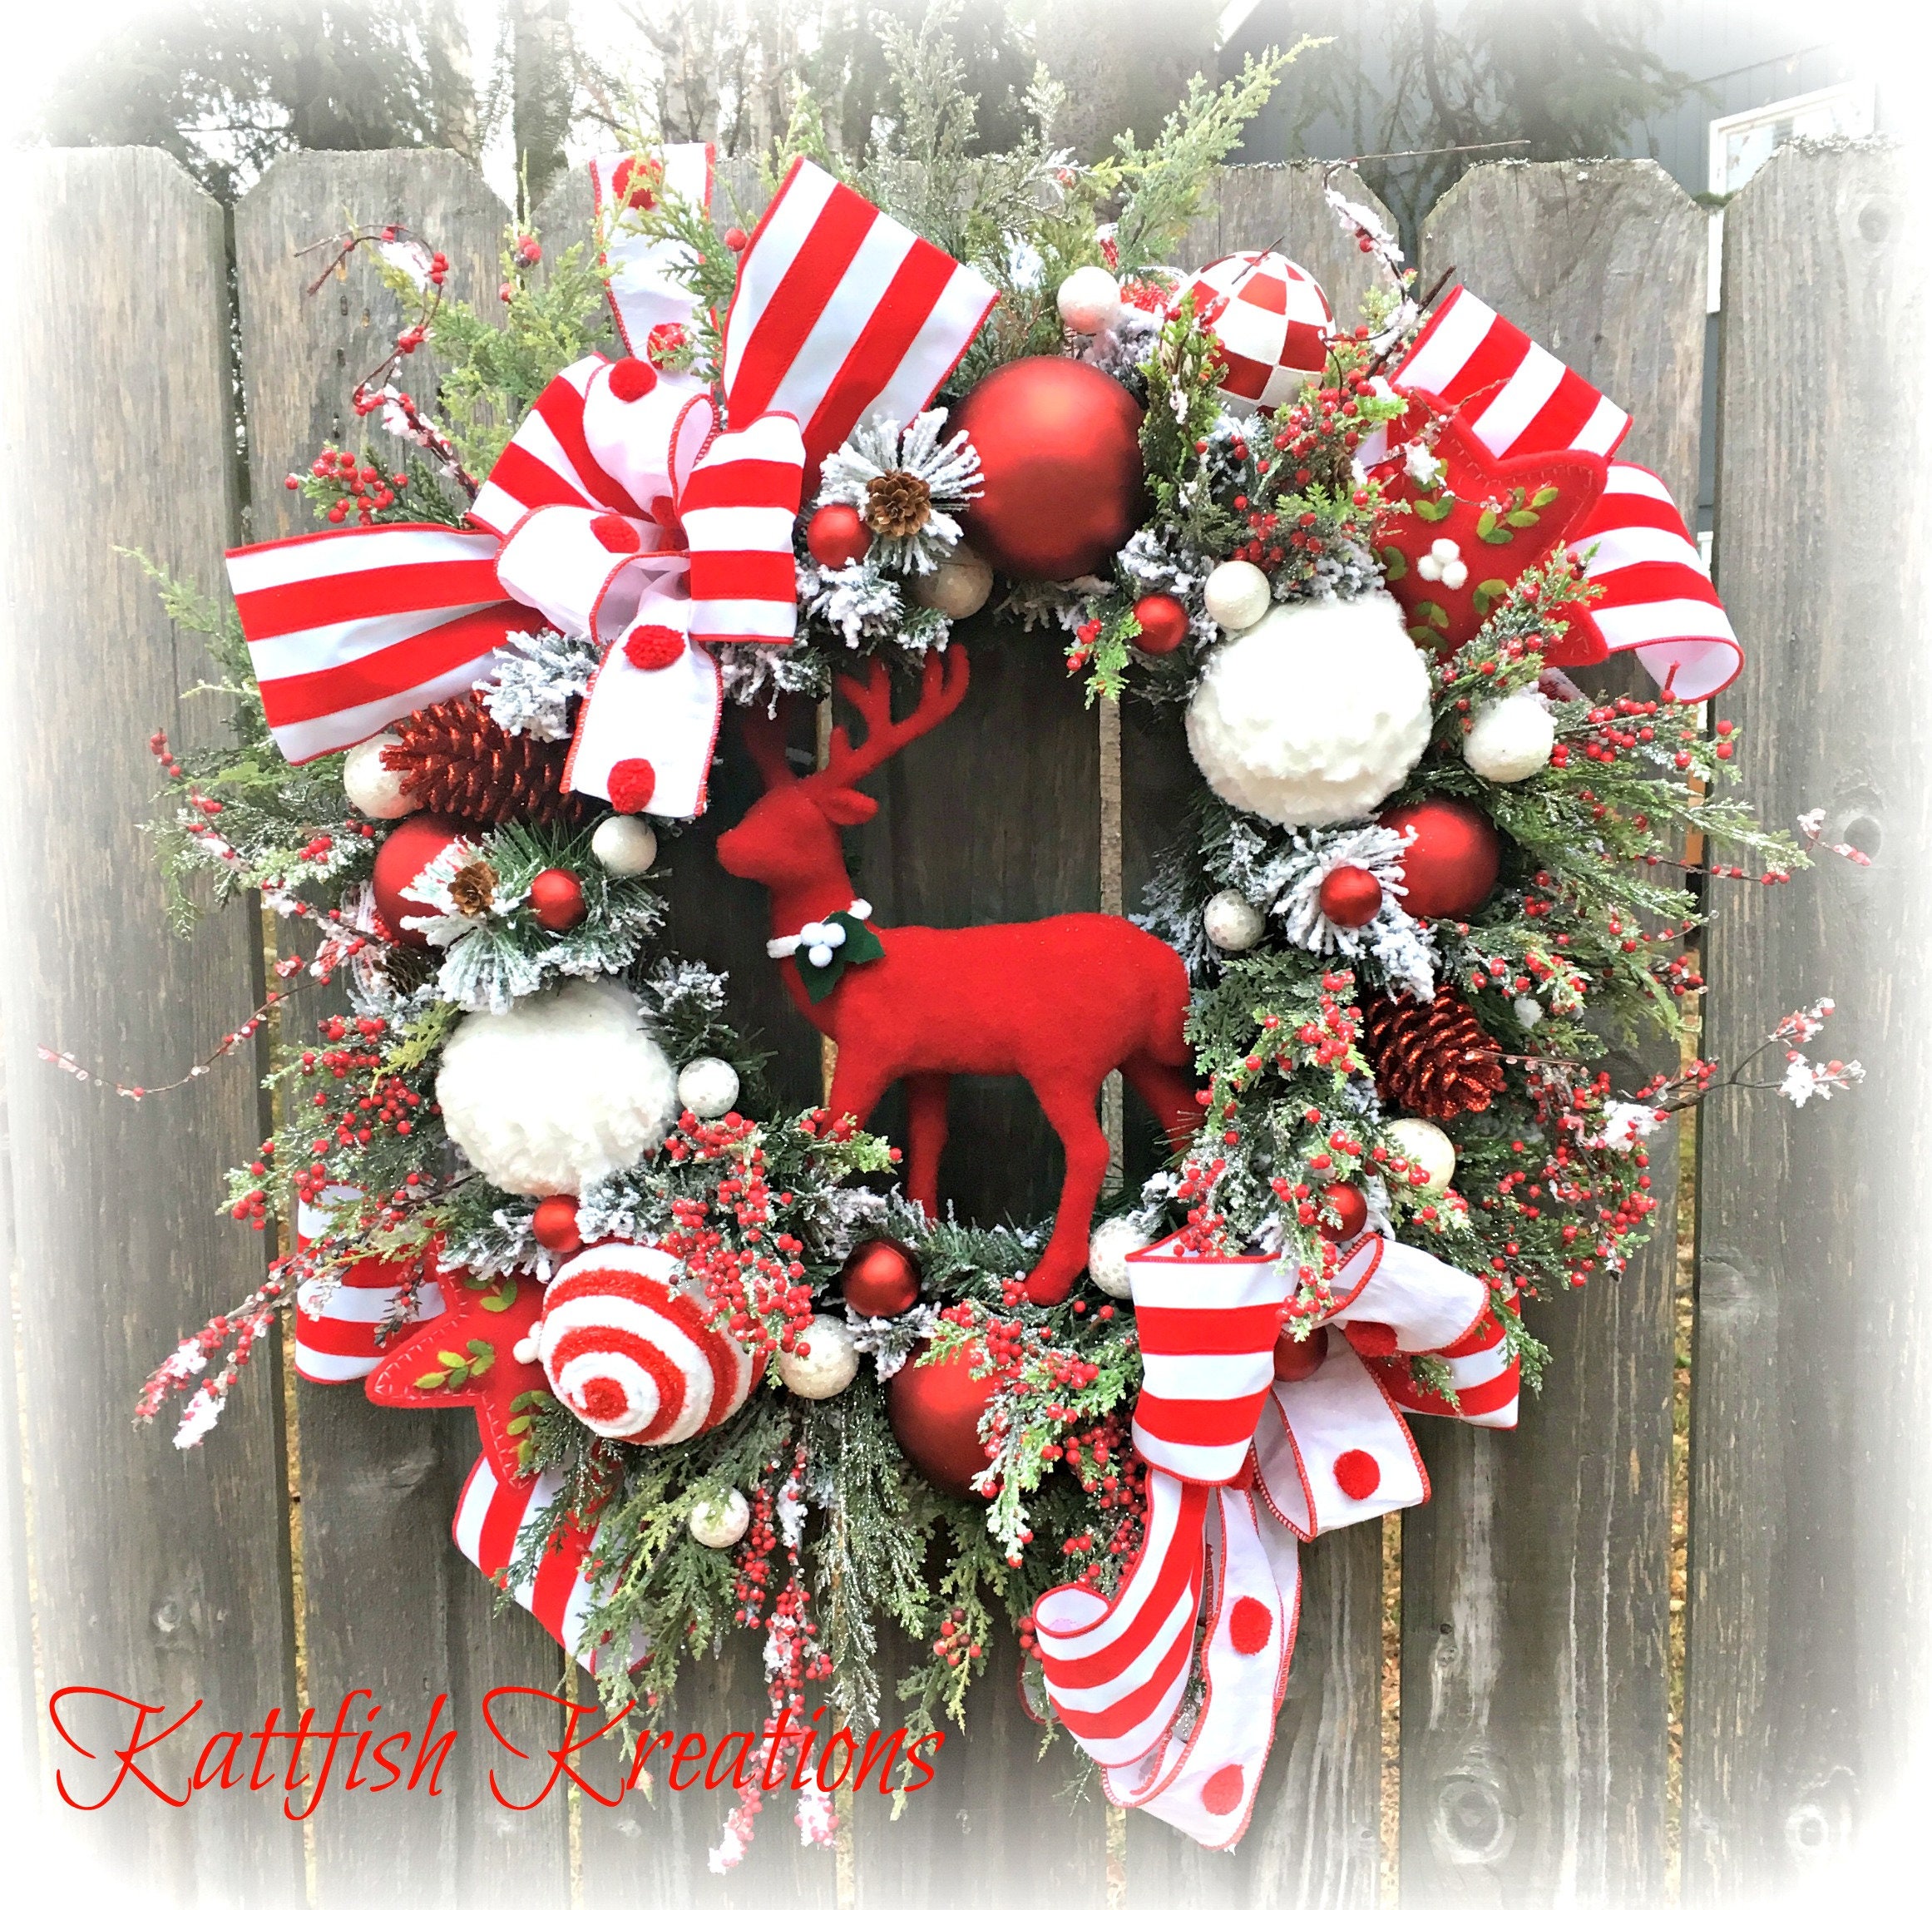 Flocked Wreath Flocked Winter Wreath Vintage Christmas Wreath Winter Wreath Poinsettia Wreath Christmas Wreath